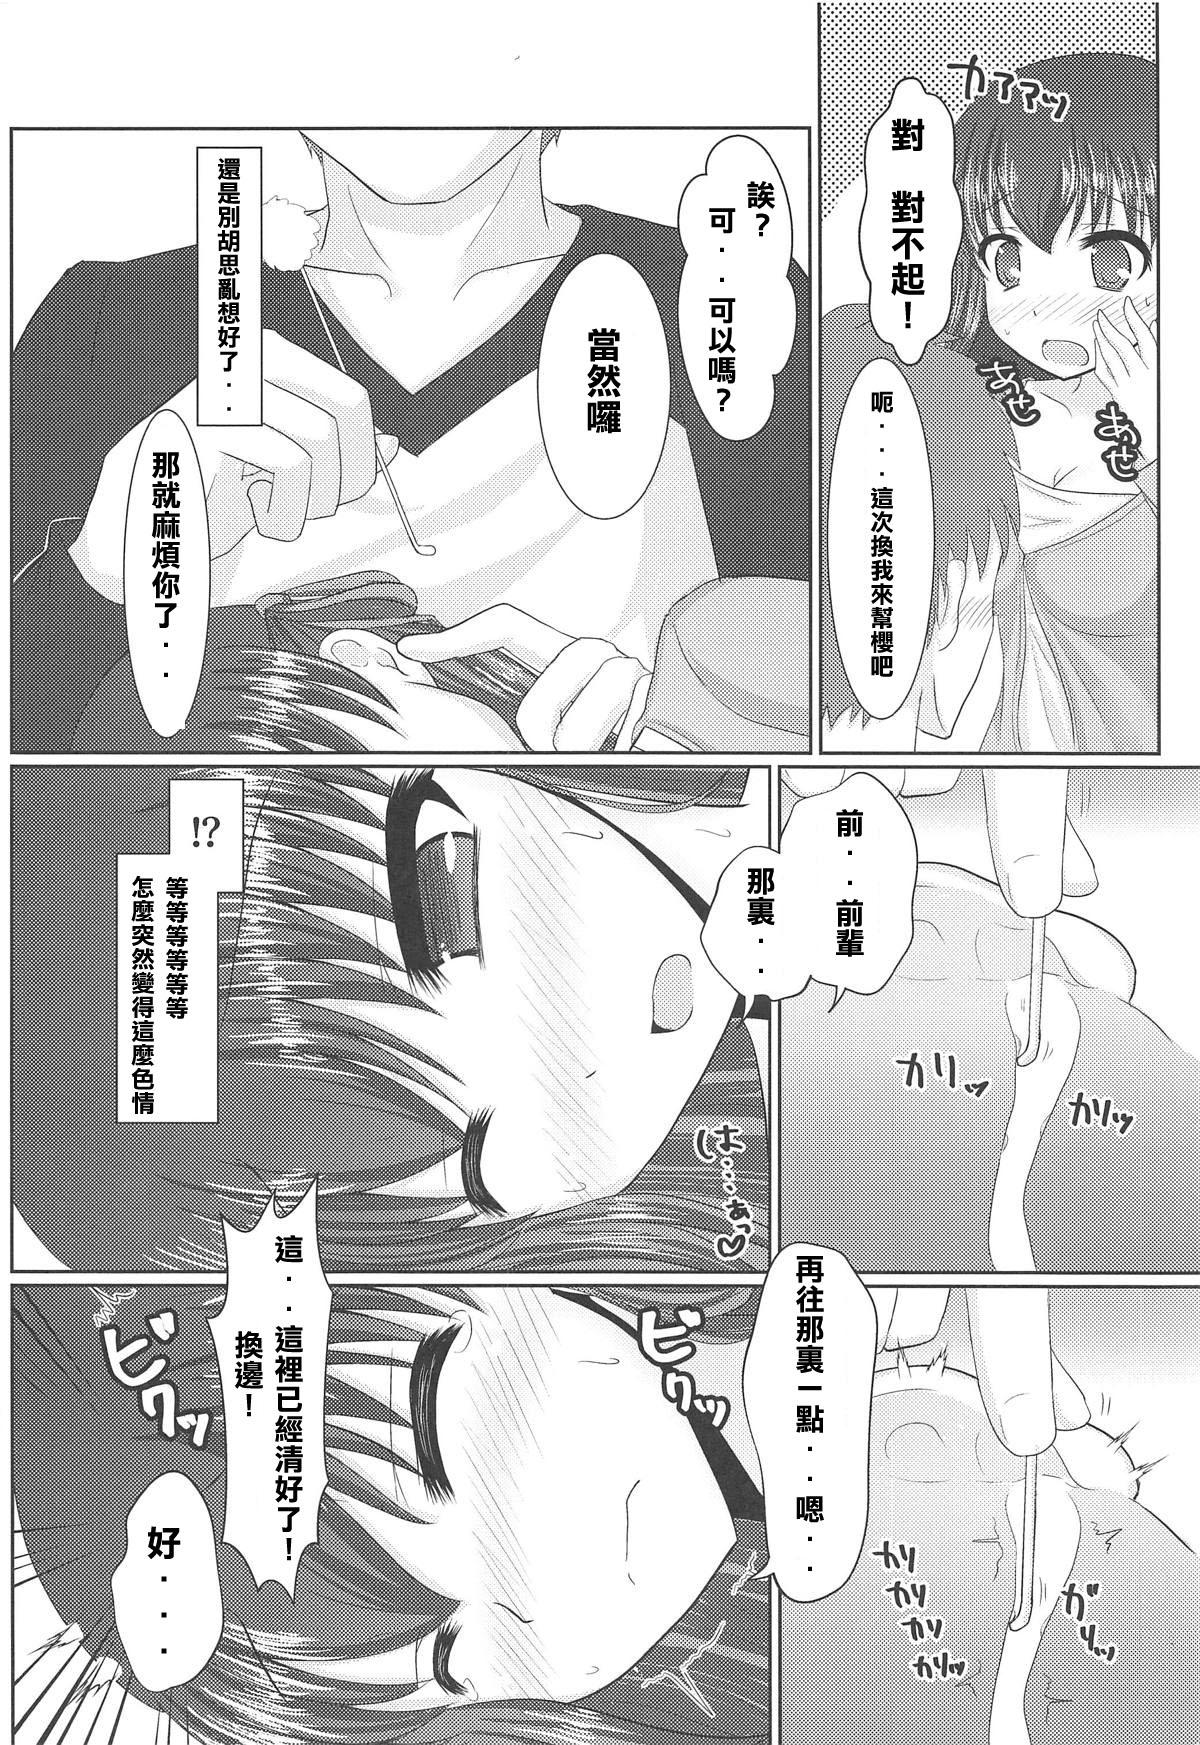 Sextape Hiza no Ue ni Sakura - Fate stay night Bed - Page 8